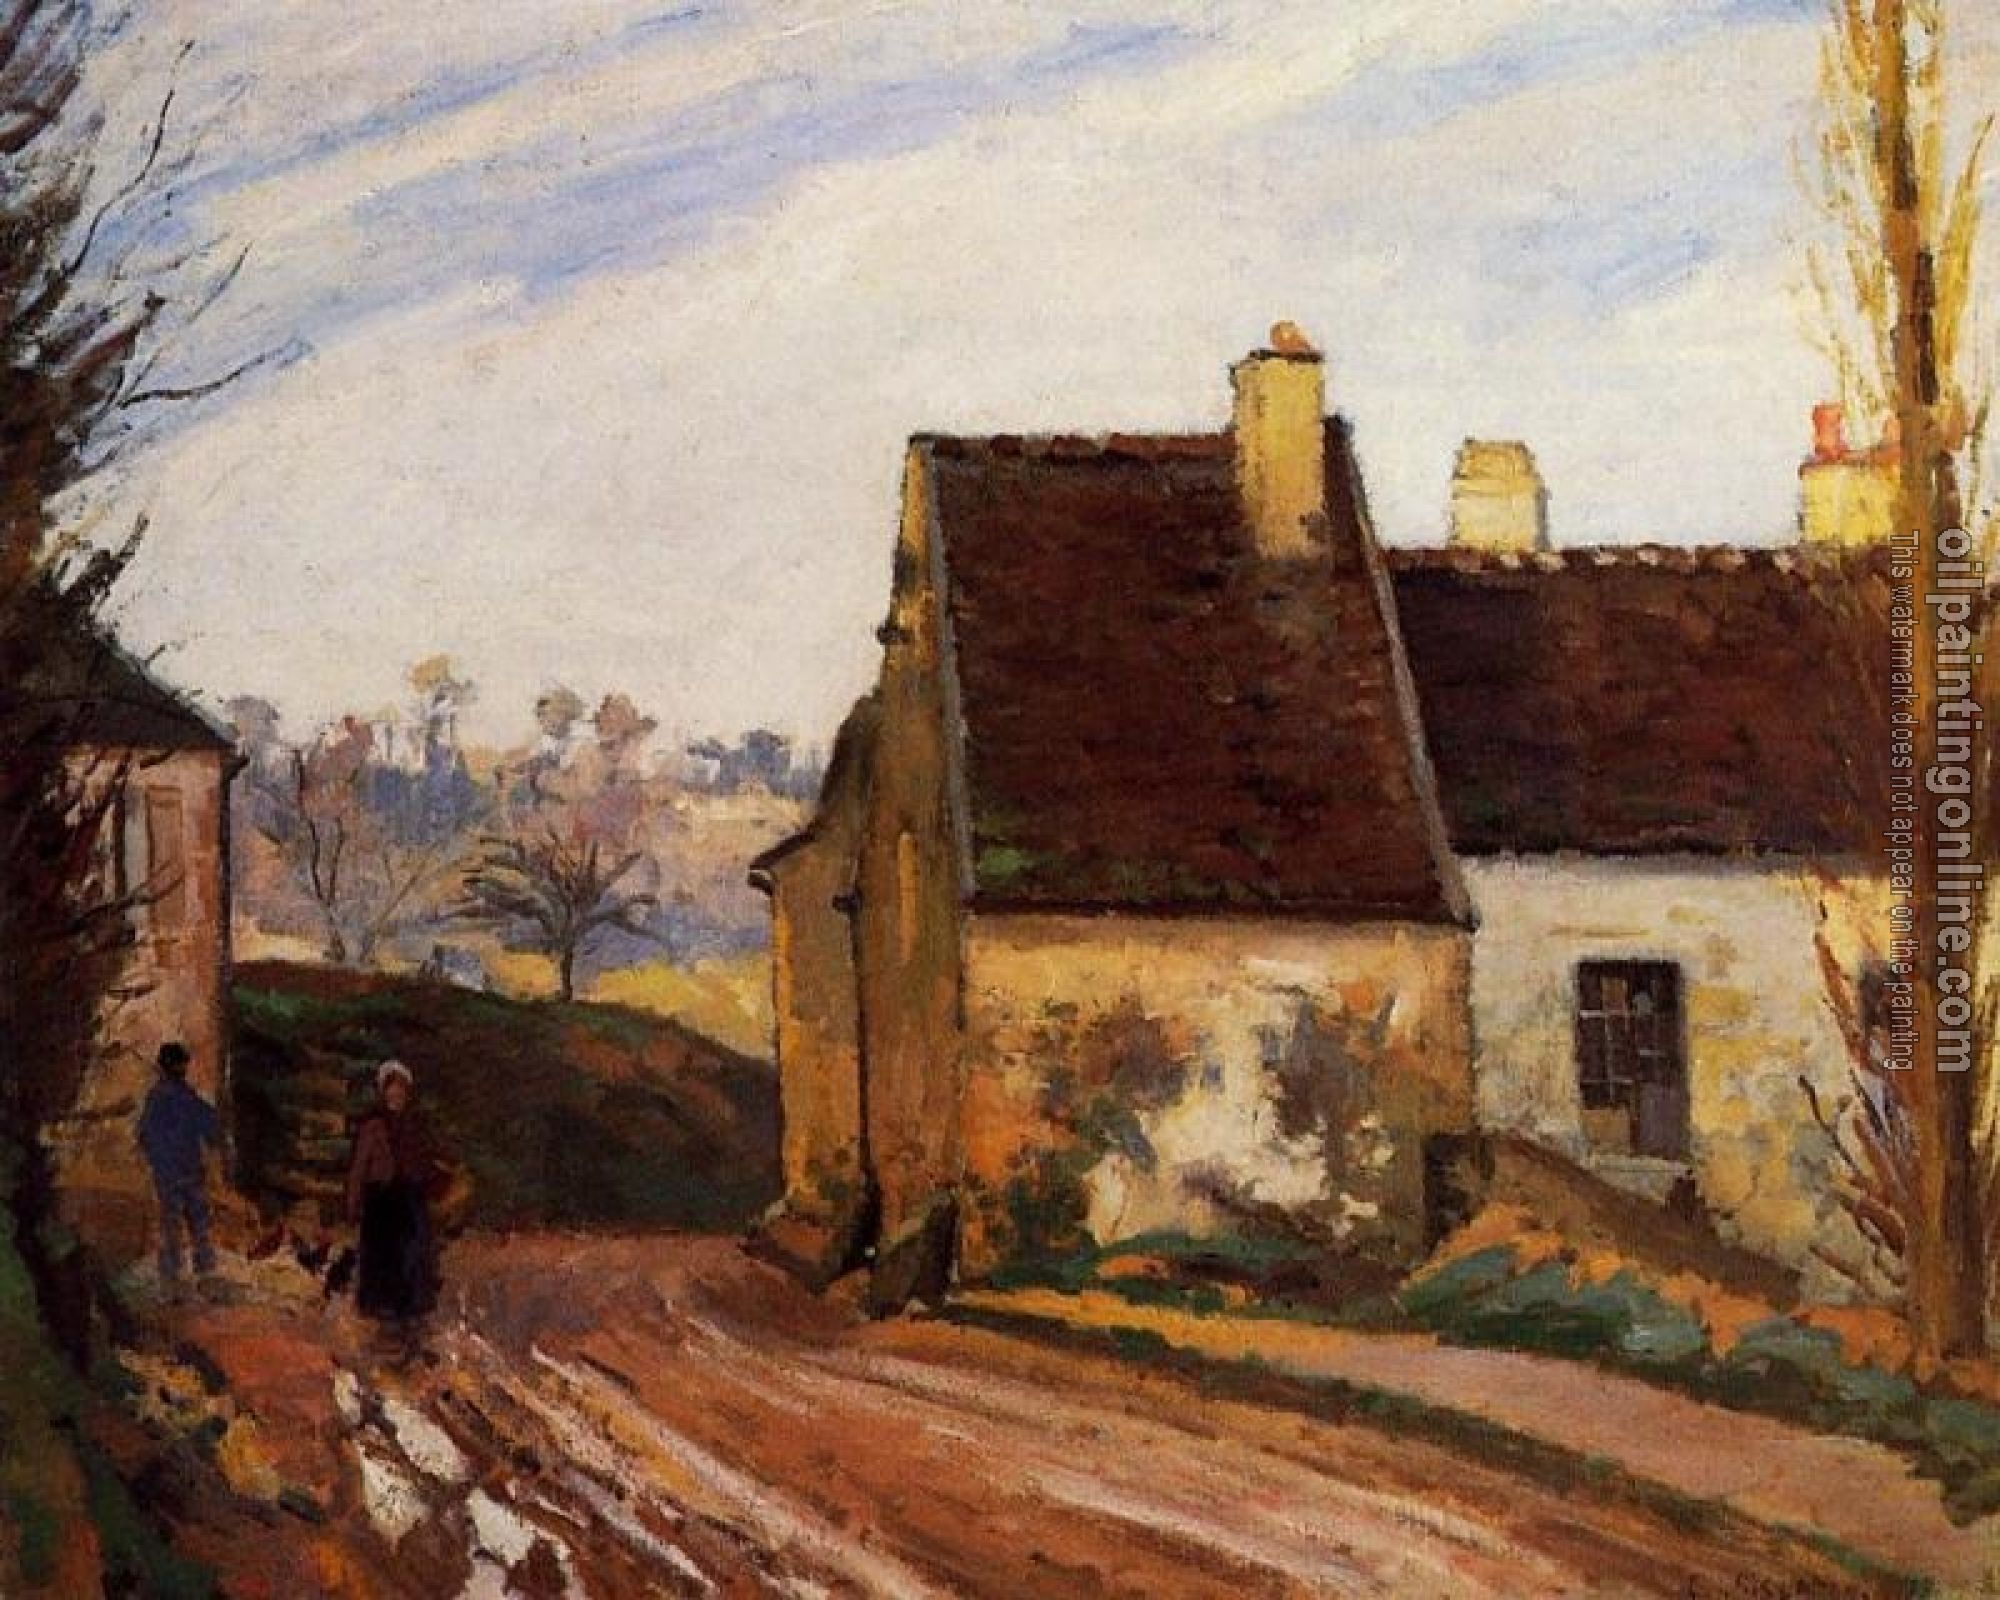 Pissarro, Camille - Homes near the Osny